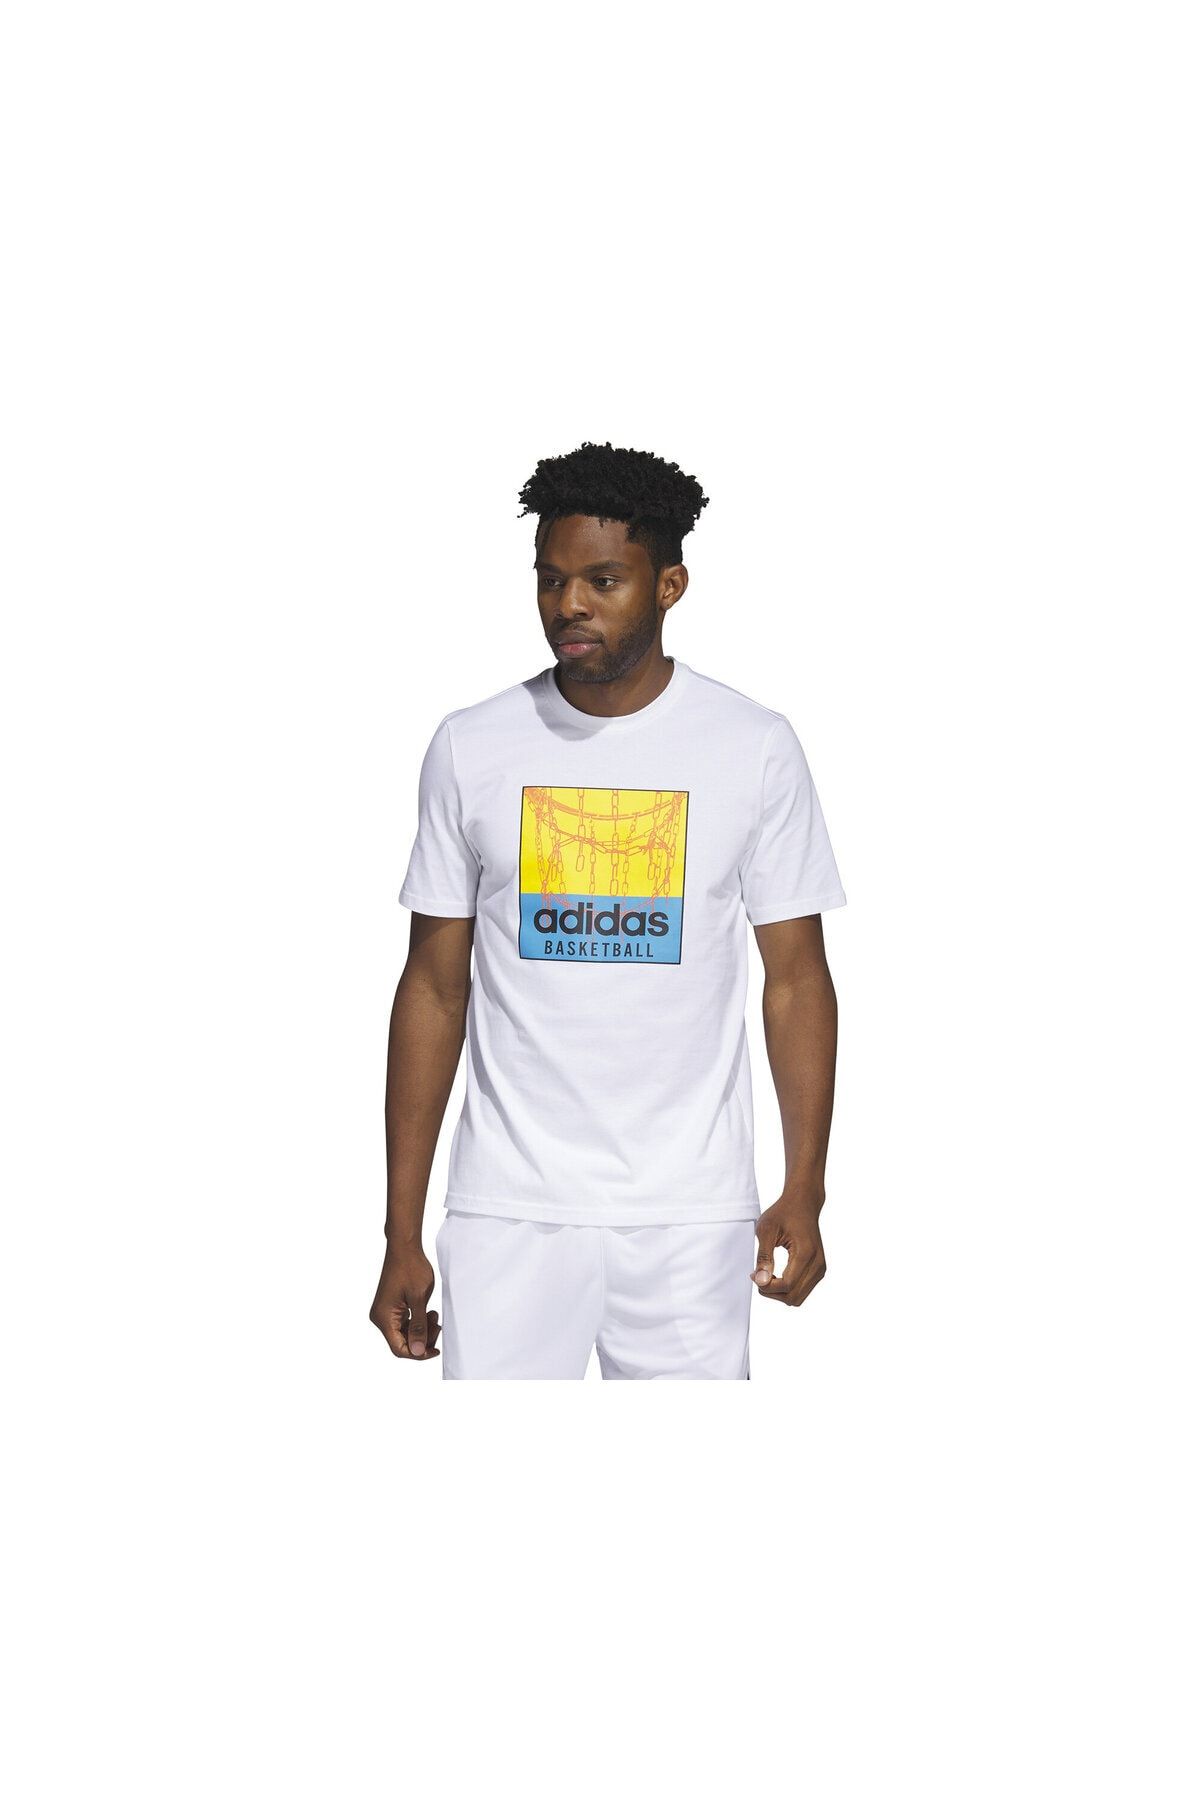 adidas Chain Net G T Erkek Basketbol Tişörtü IC1861 Beyaz